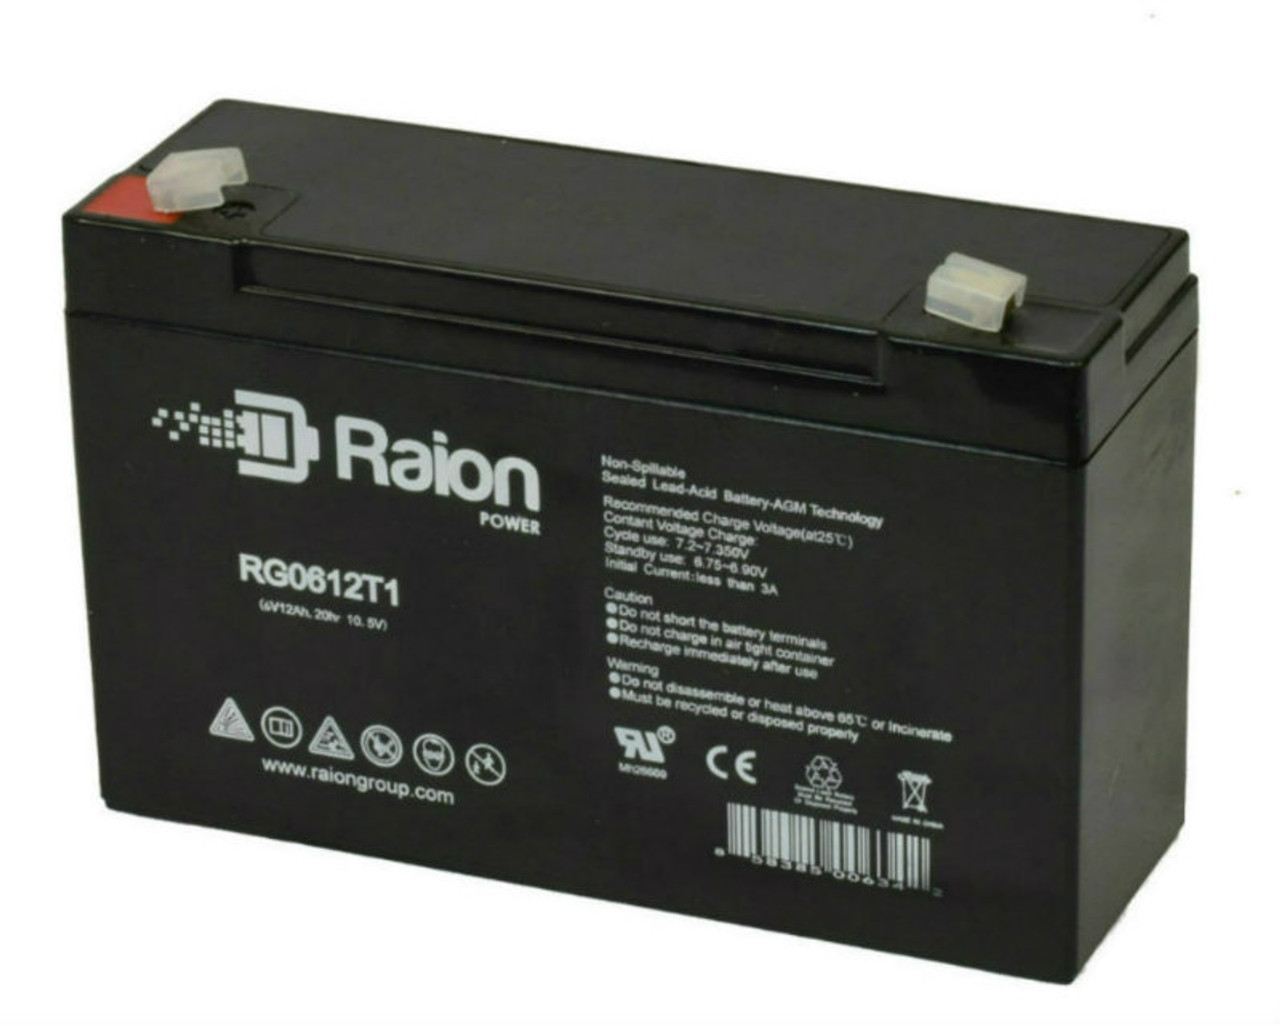 Raion Power RG06120T1 Replacement 6V 12Ah Emergency Light Battery for Big Beam 2IM6S8